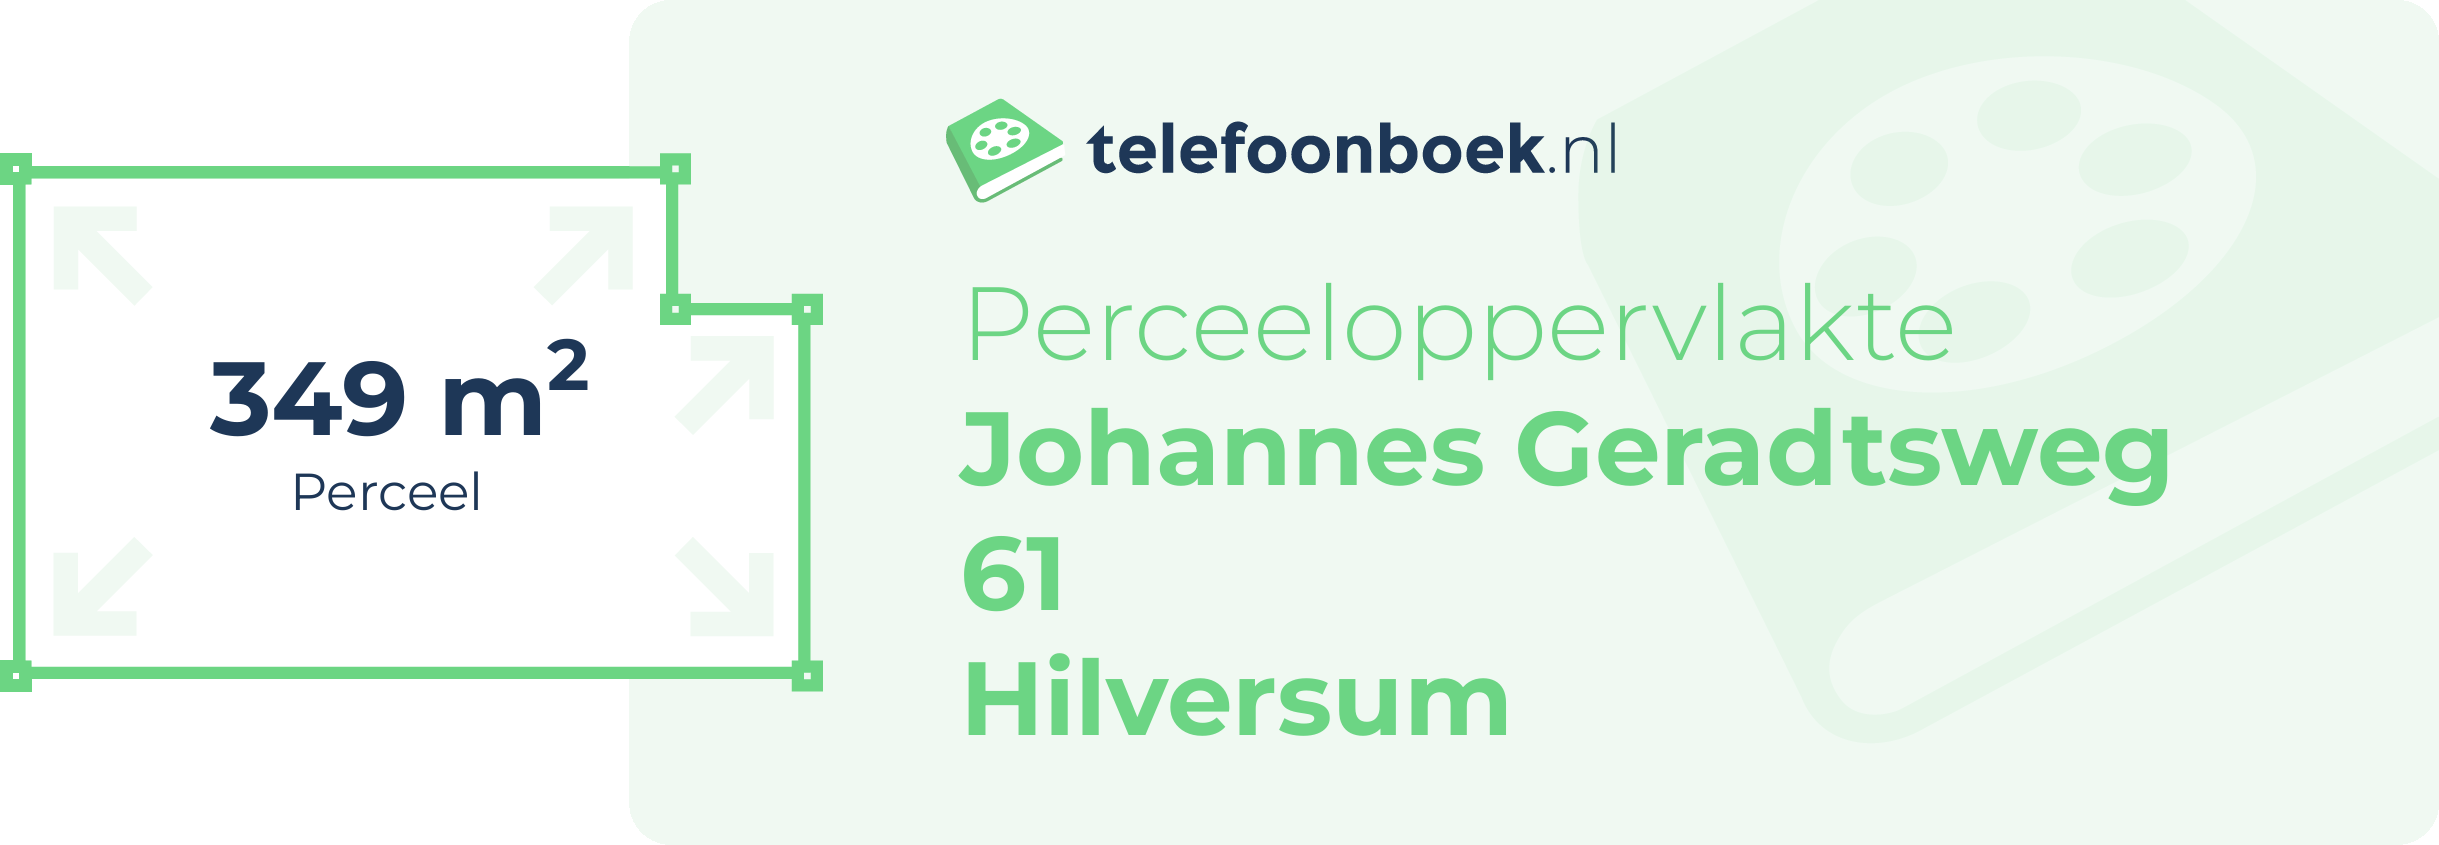 Perceeloppervlakte Johannes Geradtsweg 61 Hilversum